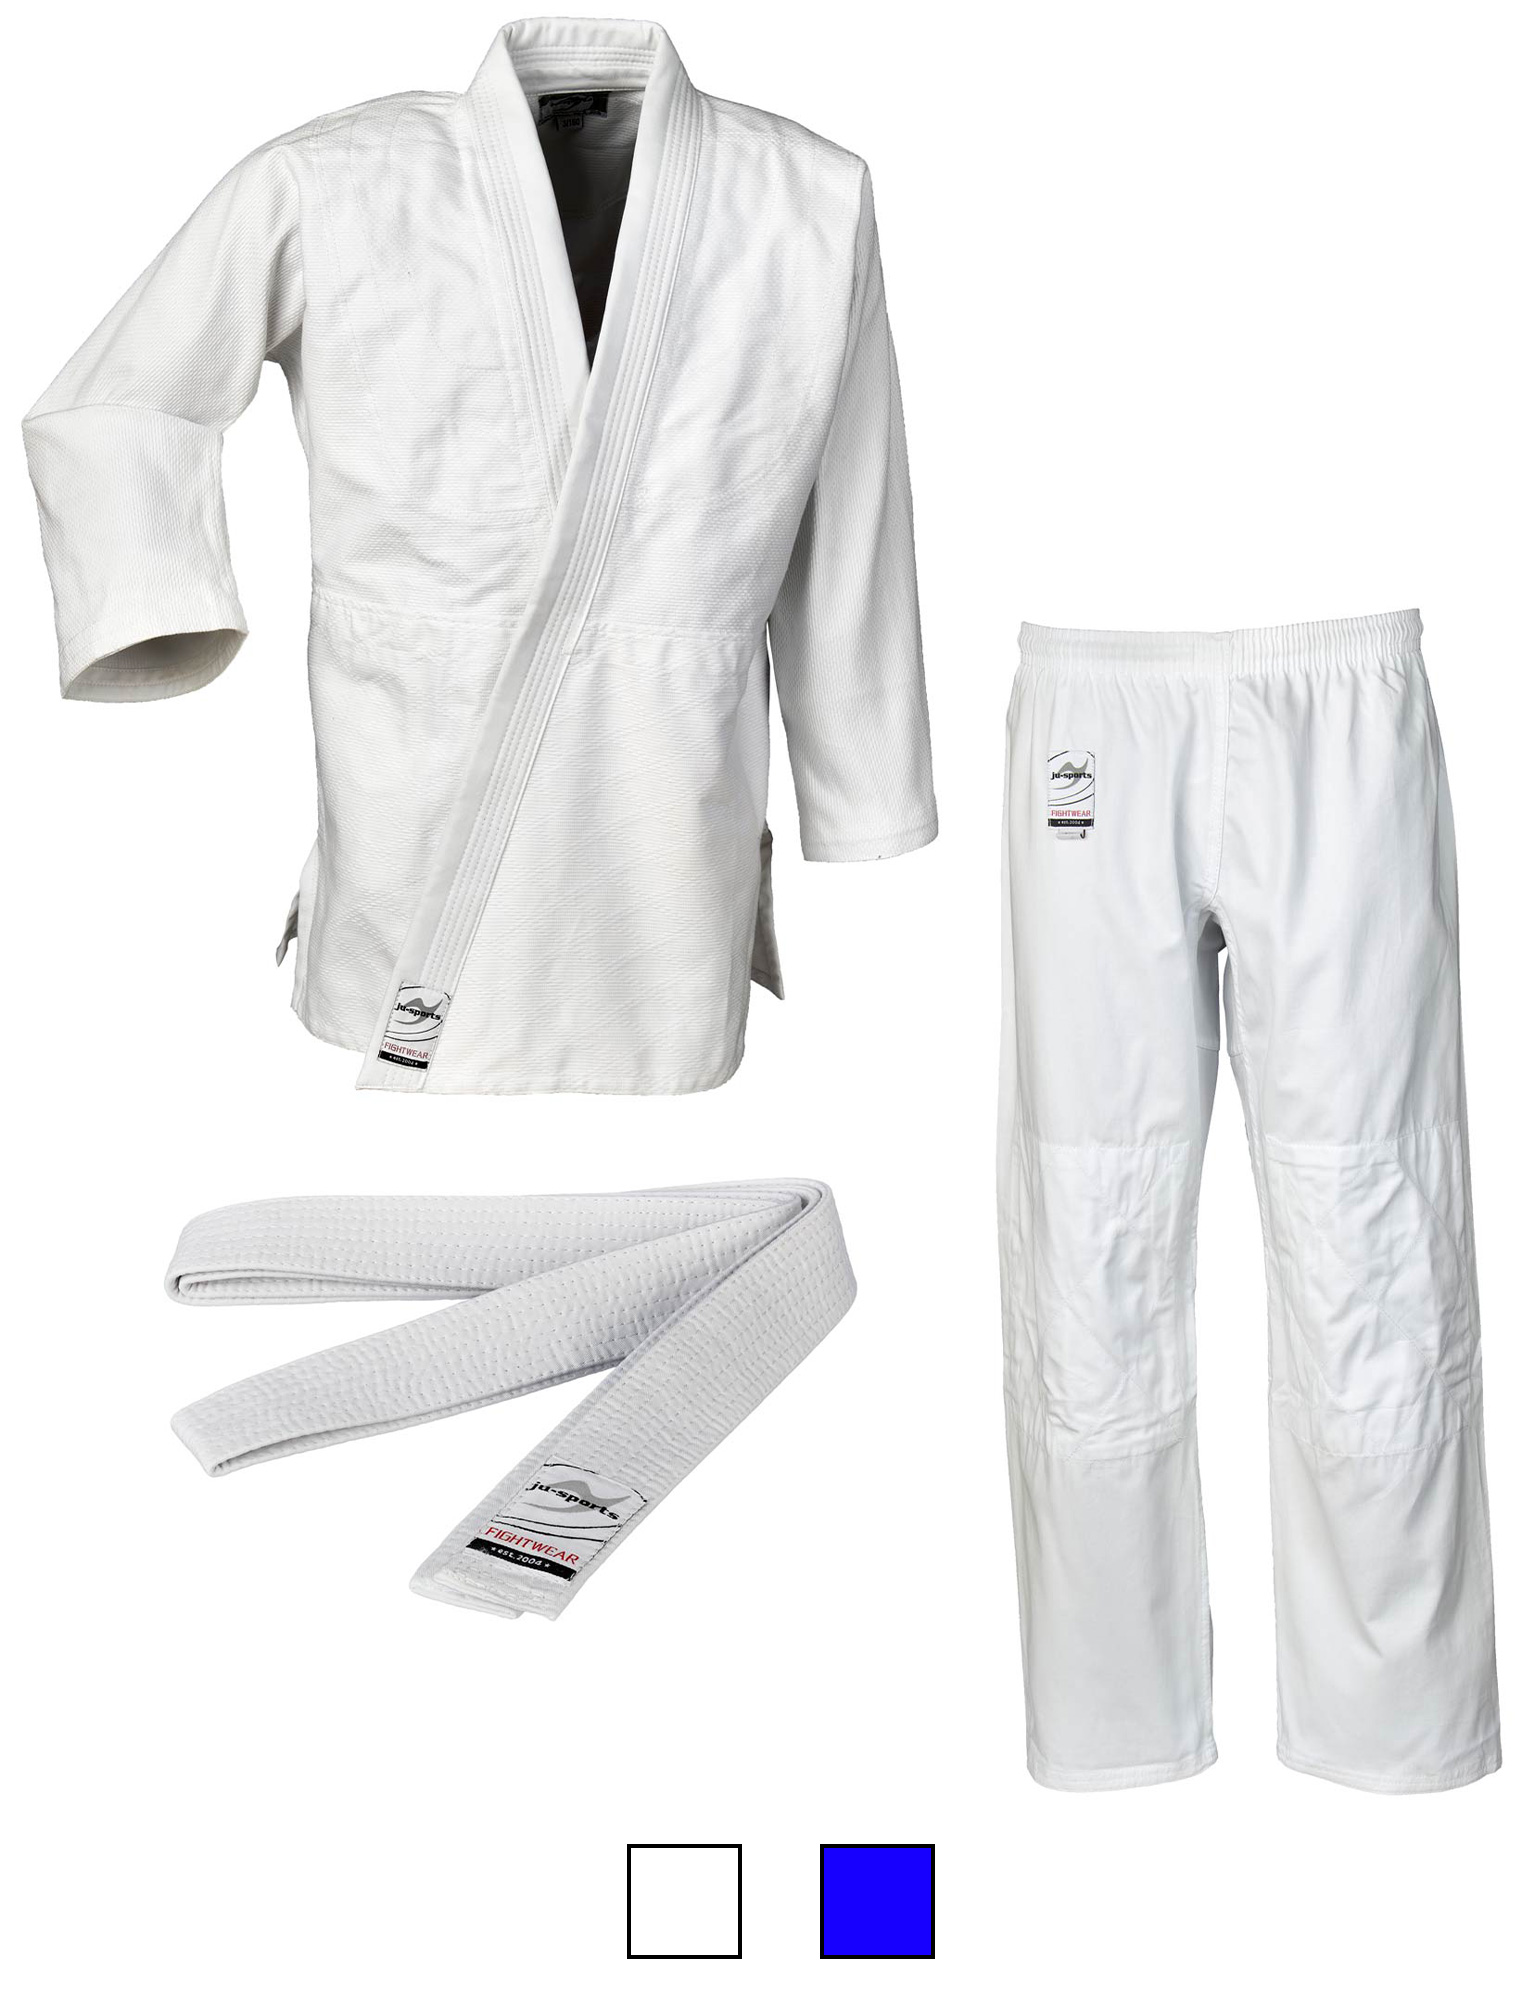 Ju-Sports Judo Gi "to start" white